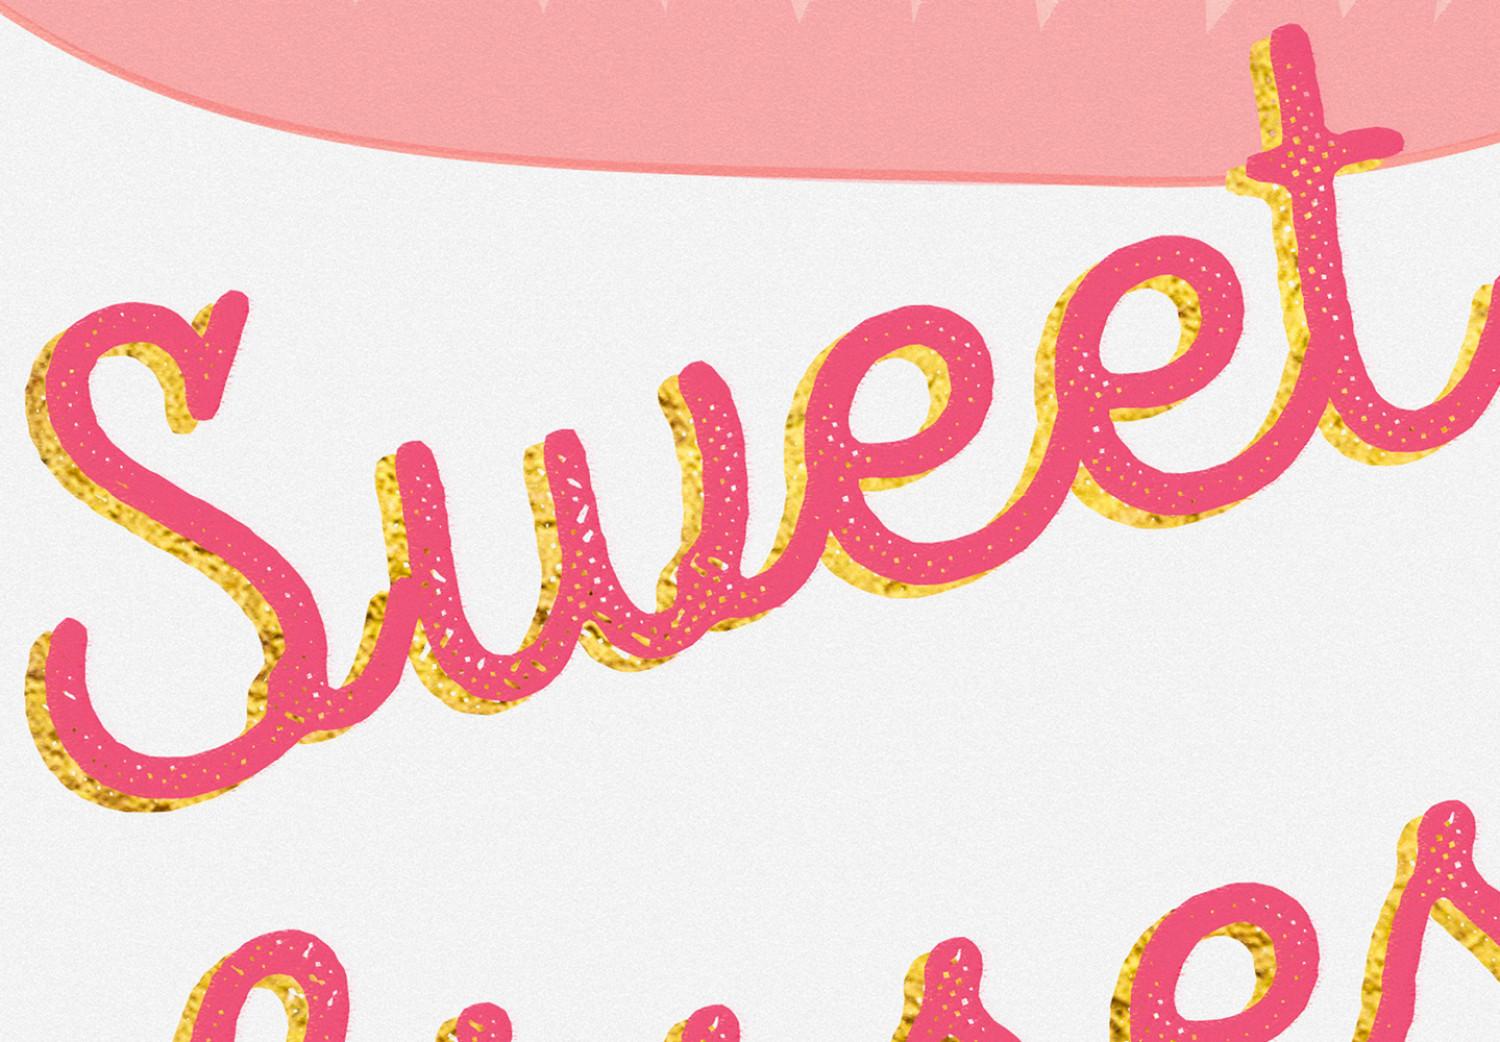 Cuadro Sweet Kisses (1 Part) Vertical